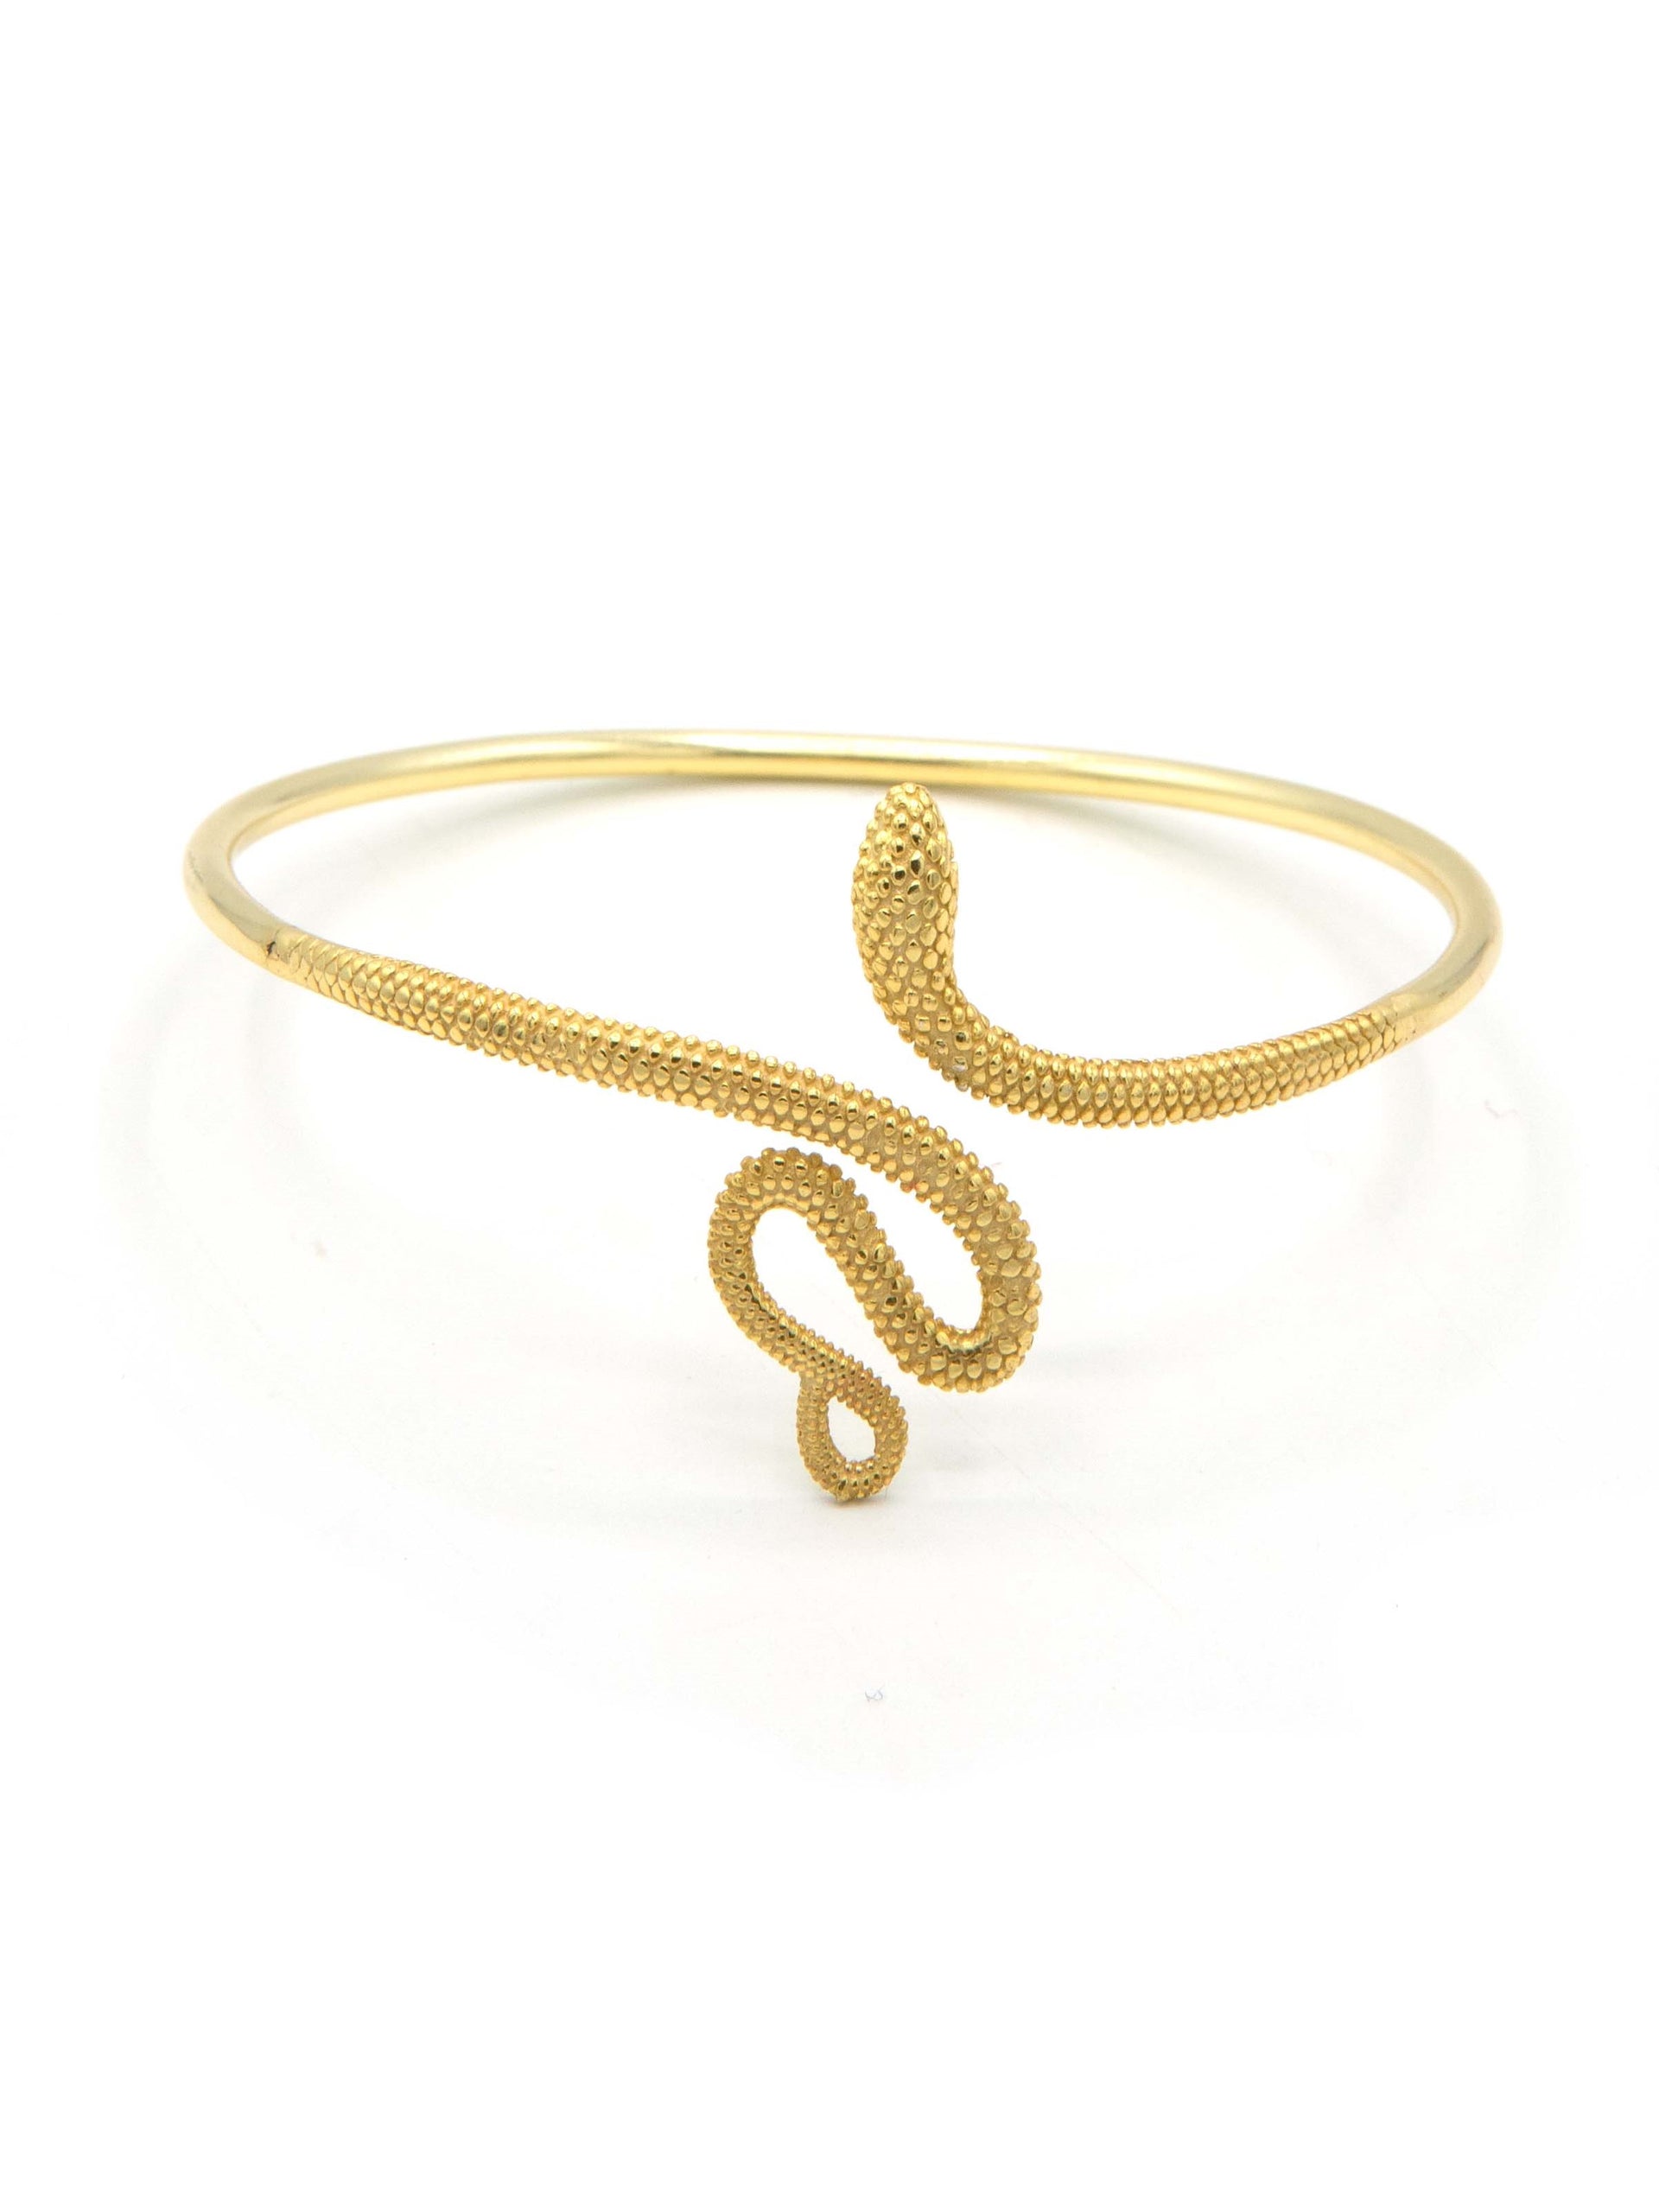 Snake Bracelet with Emerald Eyes * Silver or Black Serpent Bracelet * Snake Cuff Bracelet * Viper Serpent Jewelry Bangle - Gift for Her